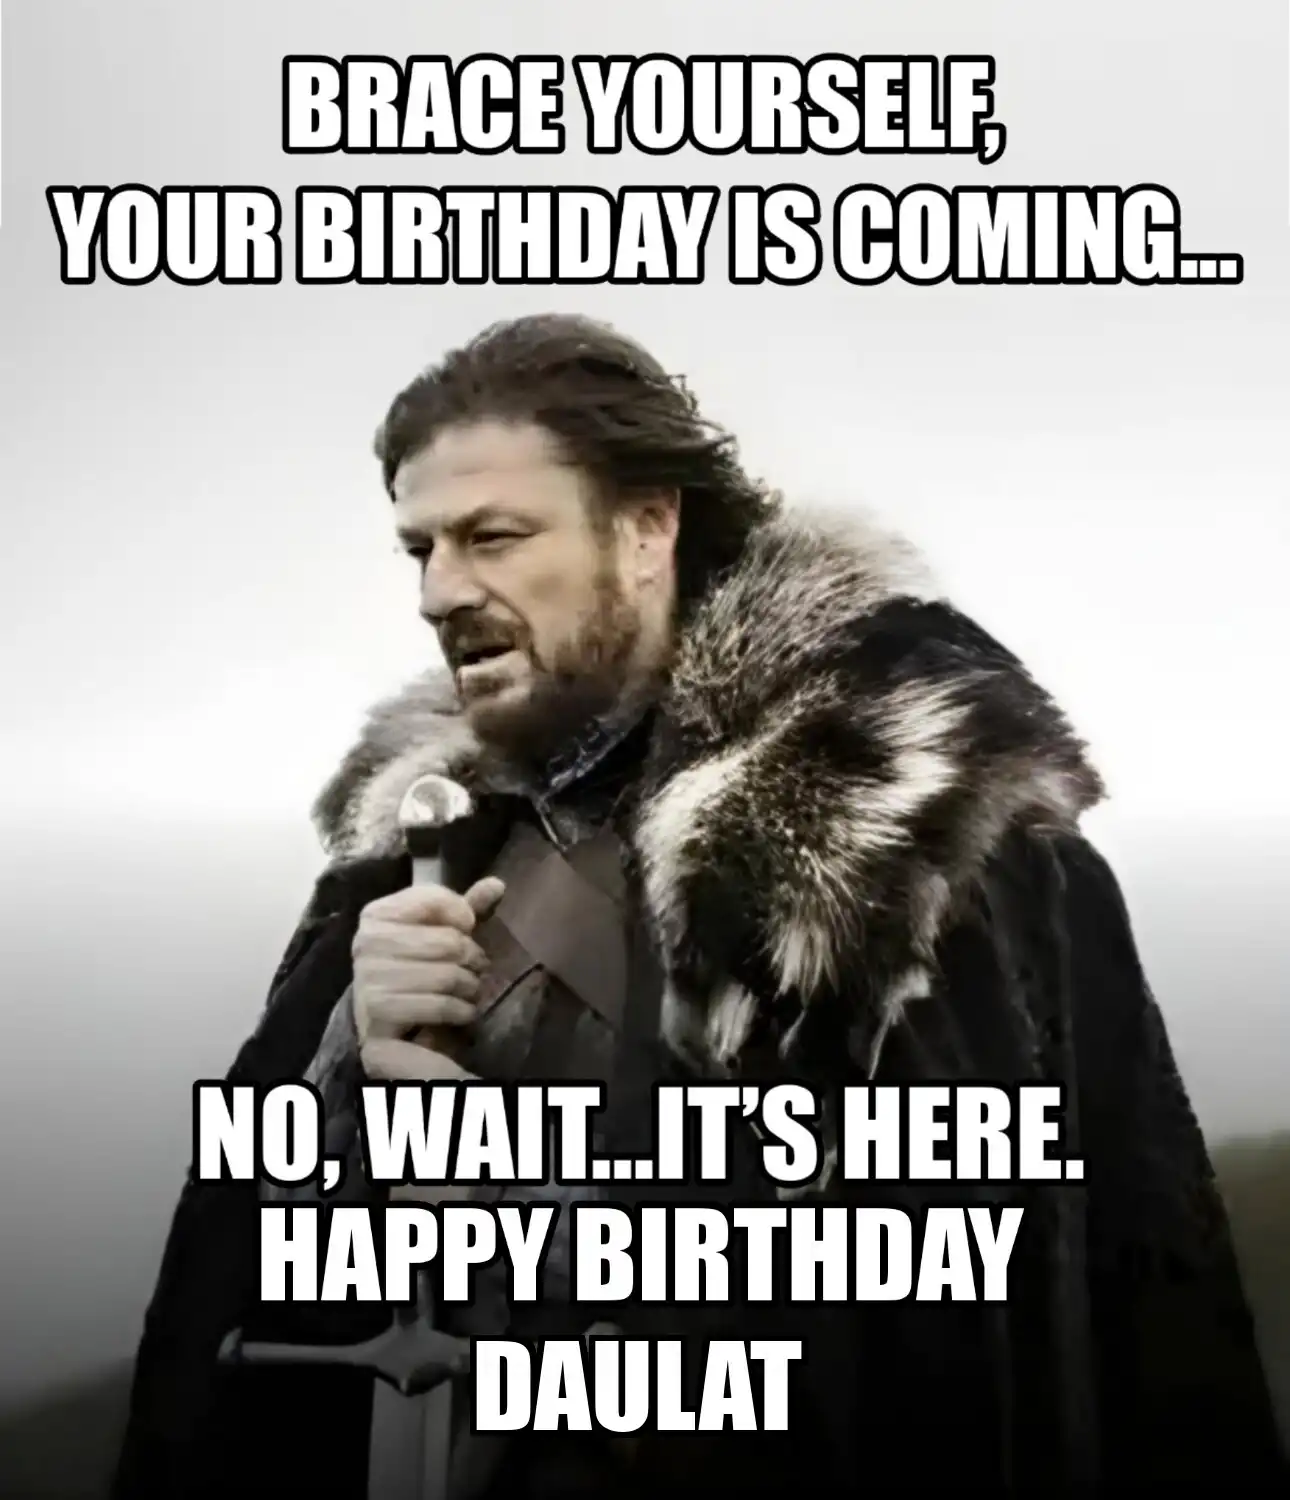 Happy Birthday Daulat Brace Yourself Your Birthday Is Coming Meme